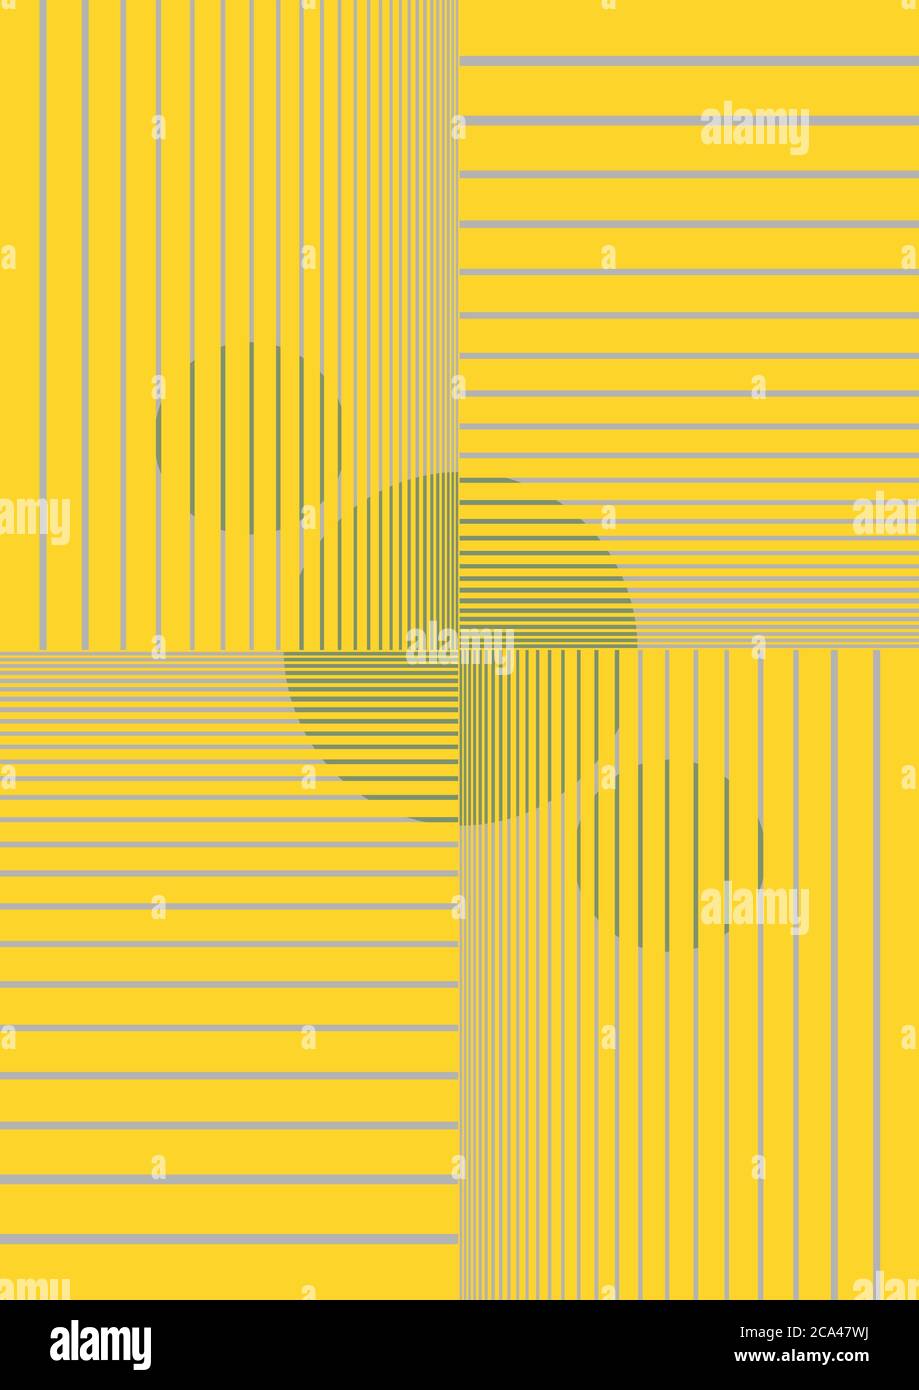 Horizontal yellow thin lines. Minimalist backdrop design. Stock Photo